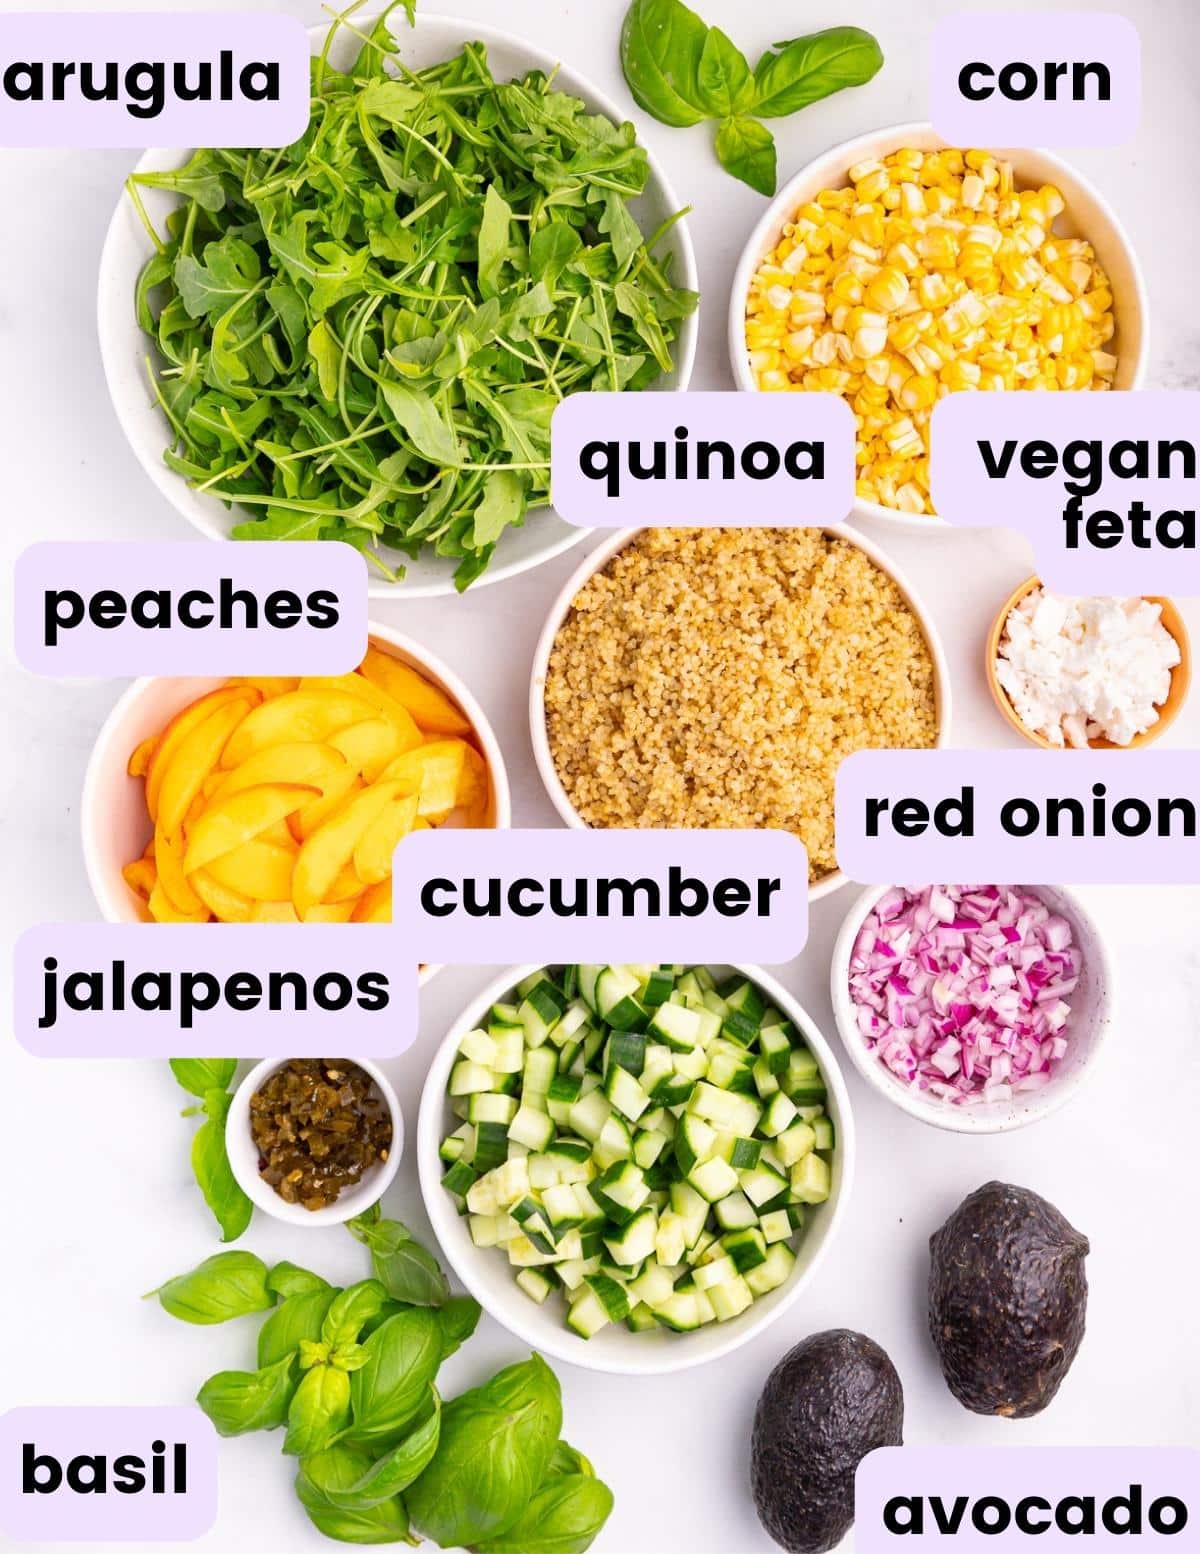 ingredients for this vegan summer salad: arugula, corn, peaches, quinoa, vegan feta, red onion, jalapenos, cucumber, avocado, basil